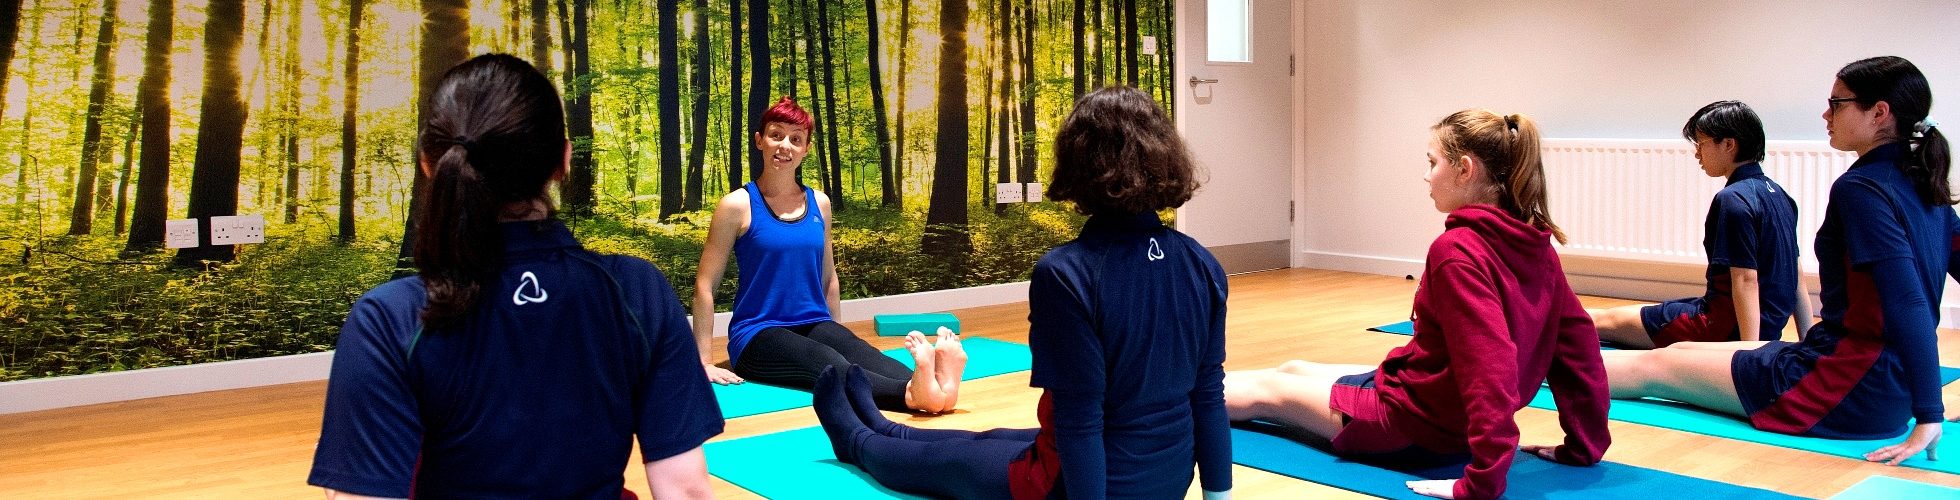 Yoga Class in Harrogate Ladies College Wellness Studio